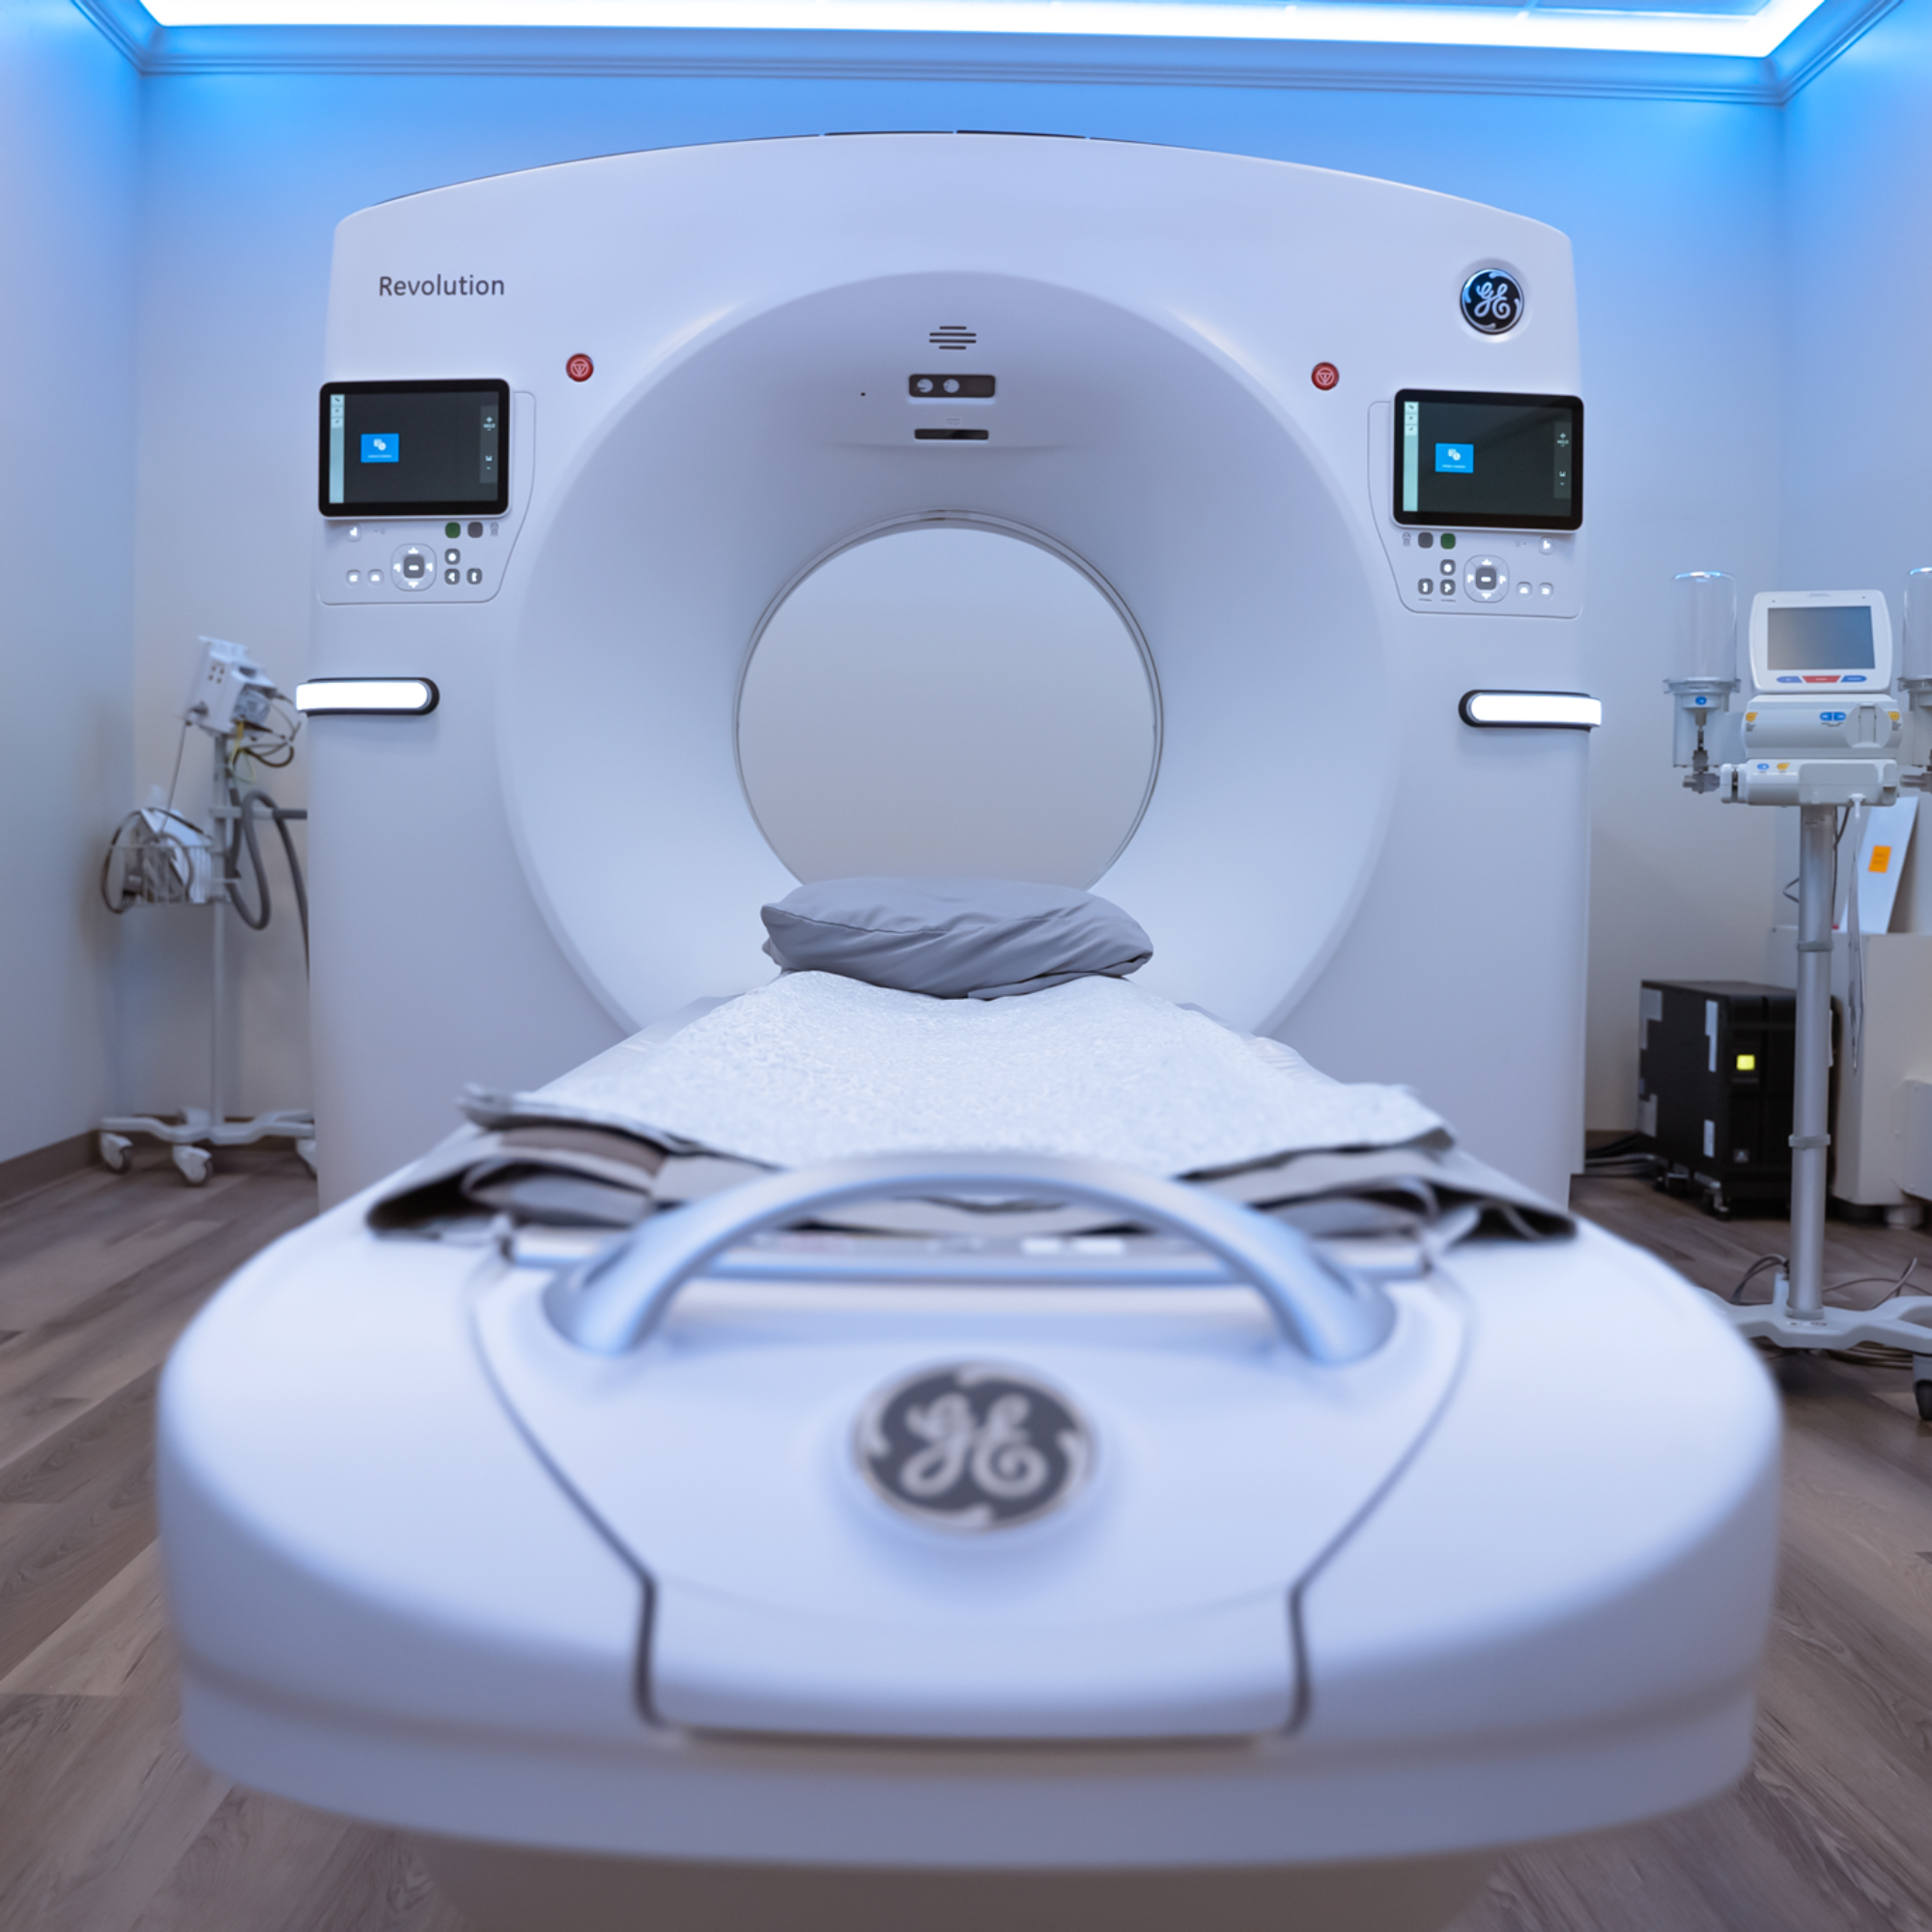 MRI machine used in medical imaging